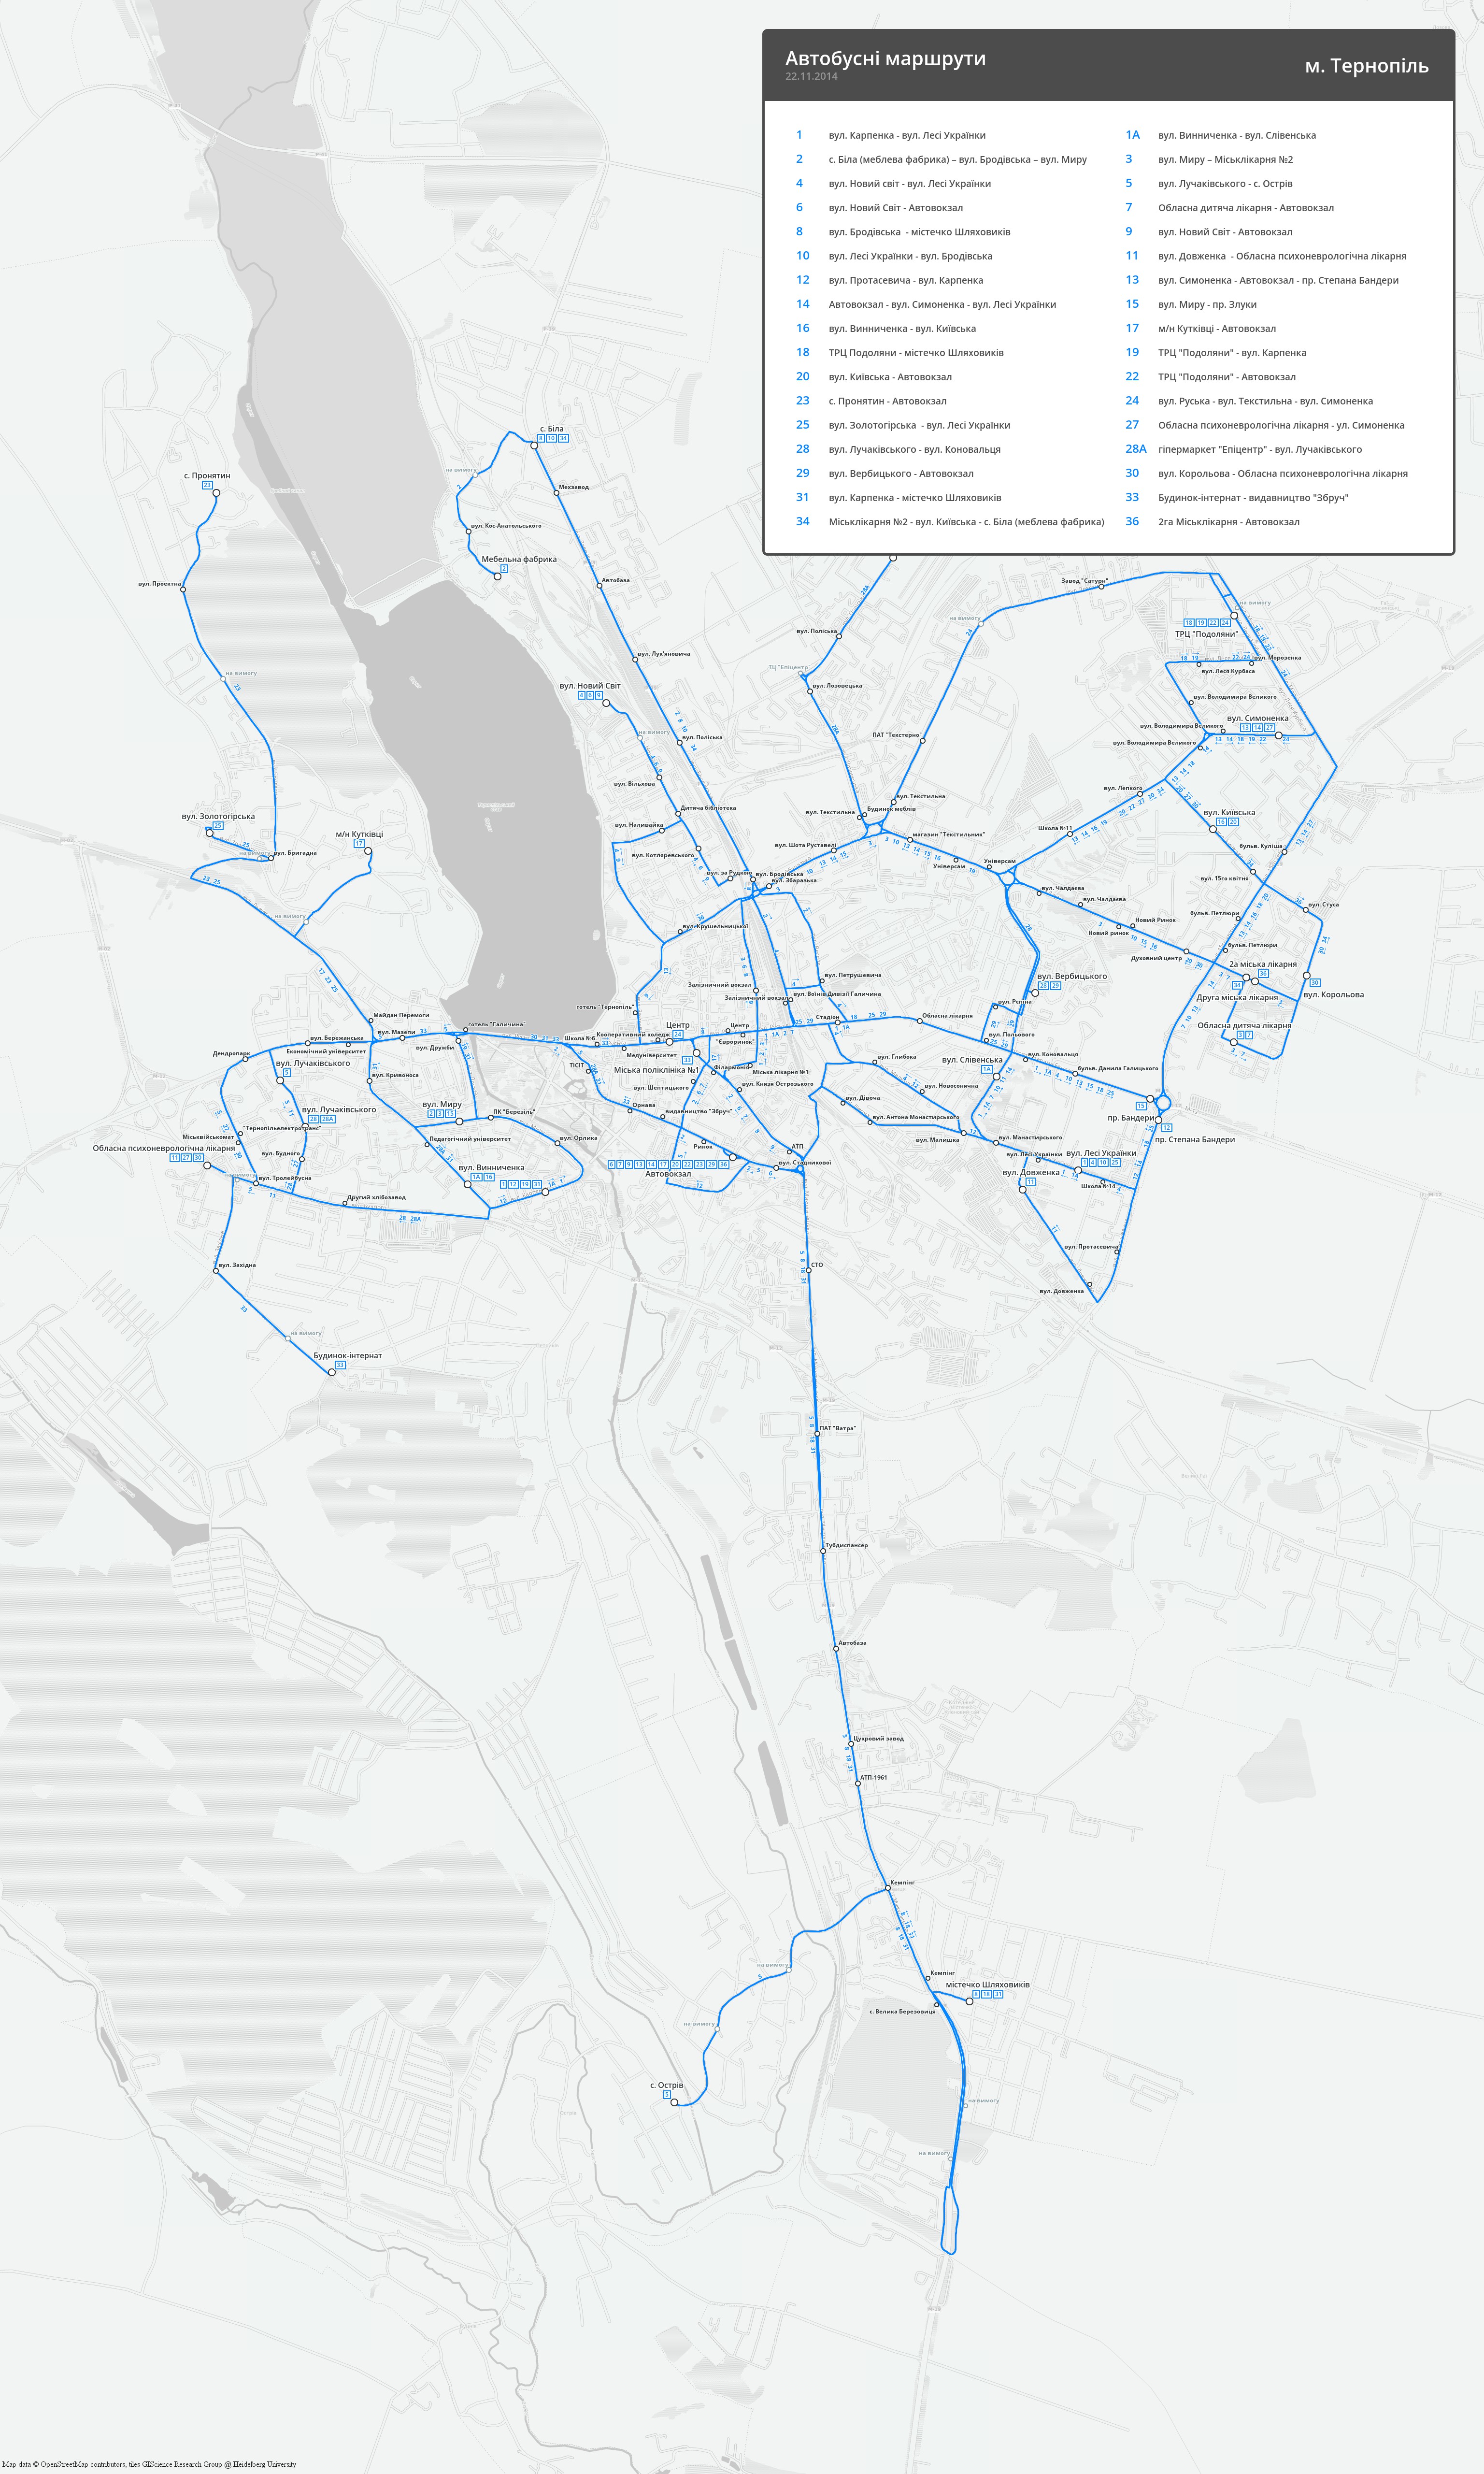 Ternopil — Maps